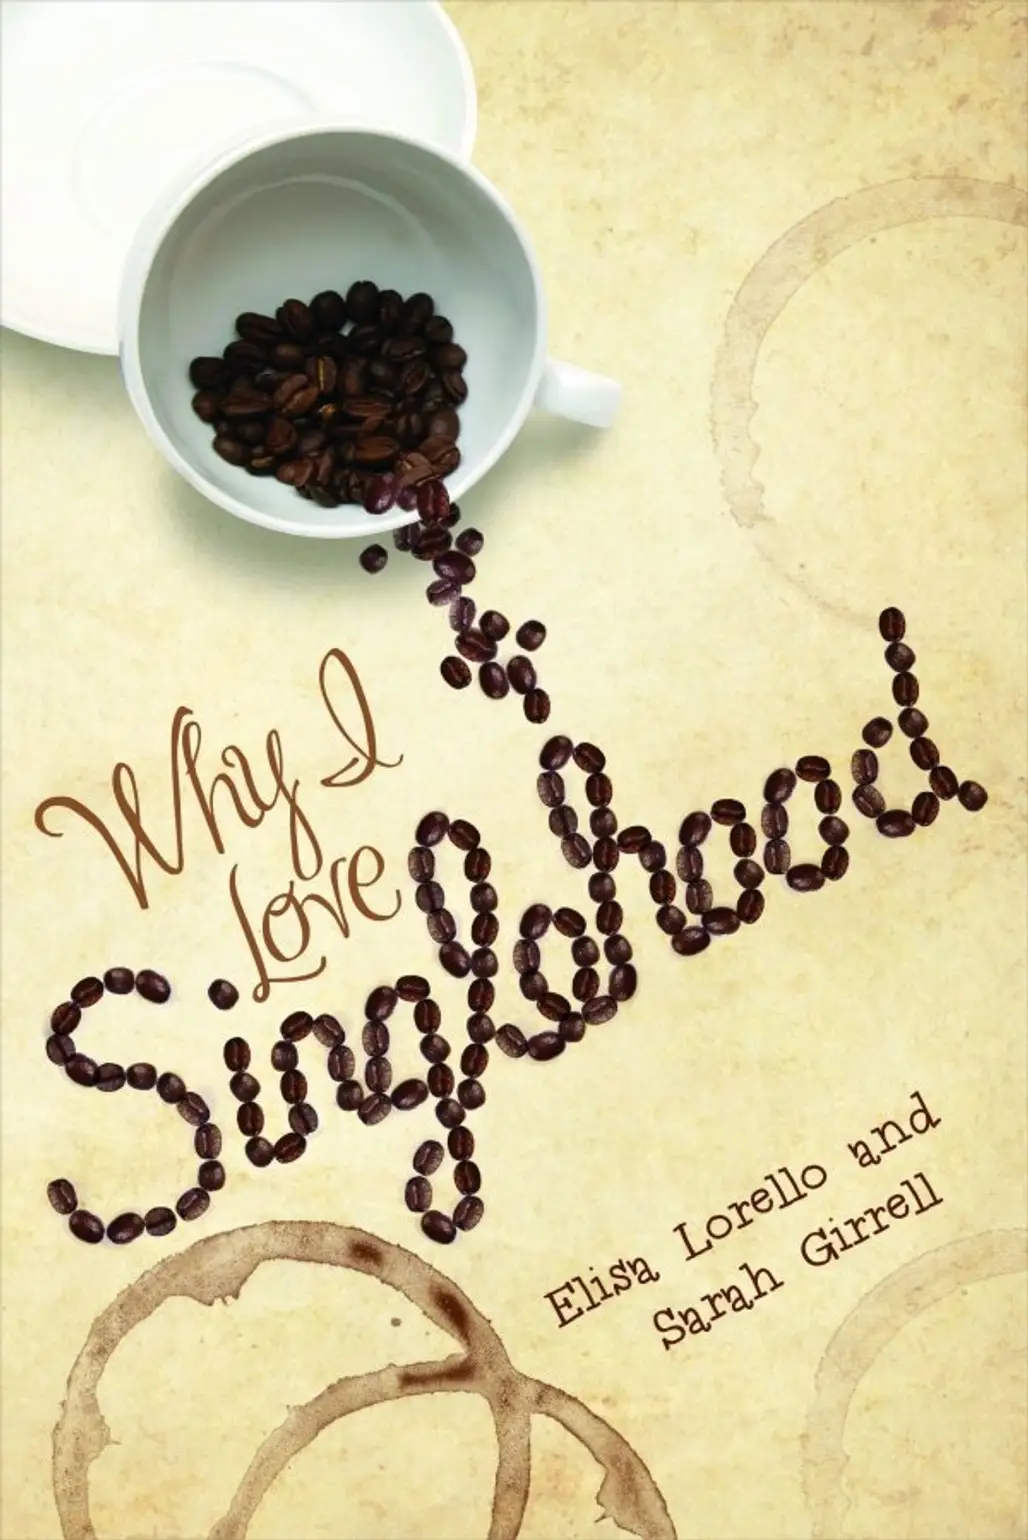 Why I Love Singlehood by Elisa Lorello and Sarah Girrell